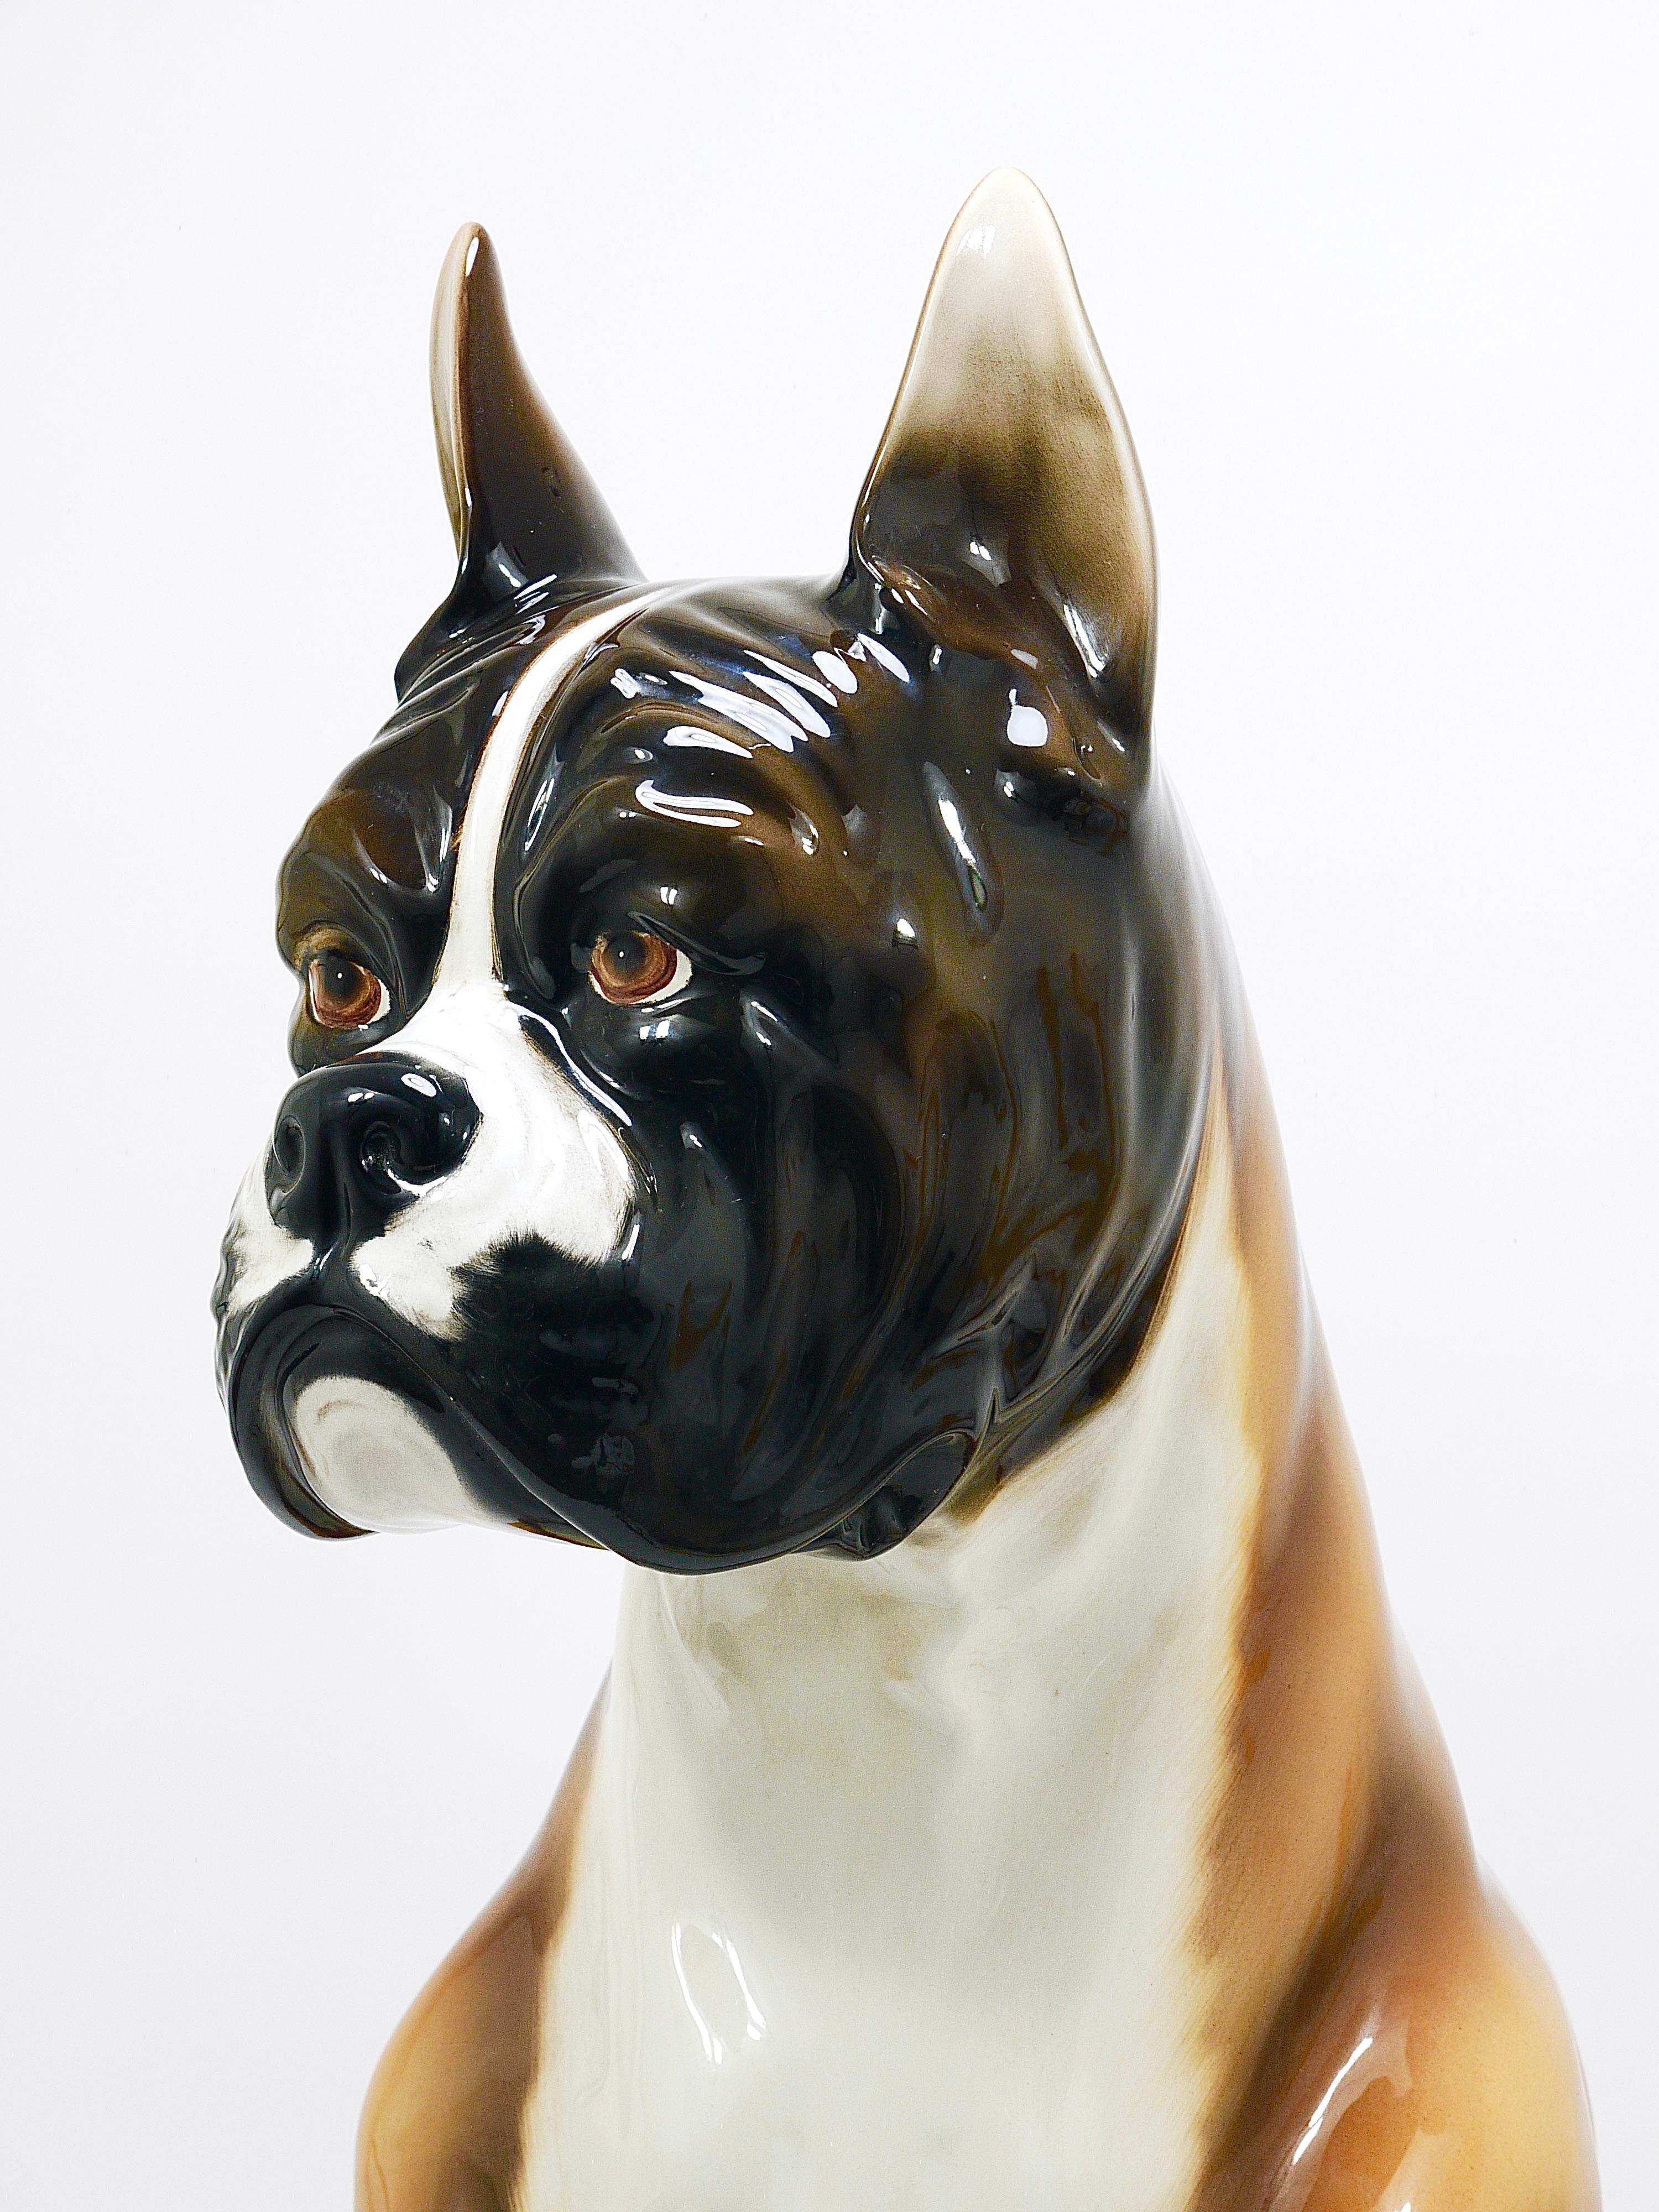 Boxer Dog Life-Size Majolica Statue Sculpture, Glazed Ceramic, Italy, 1970s For Sale 3